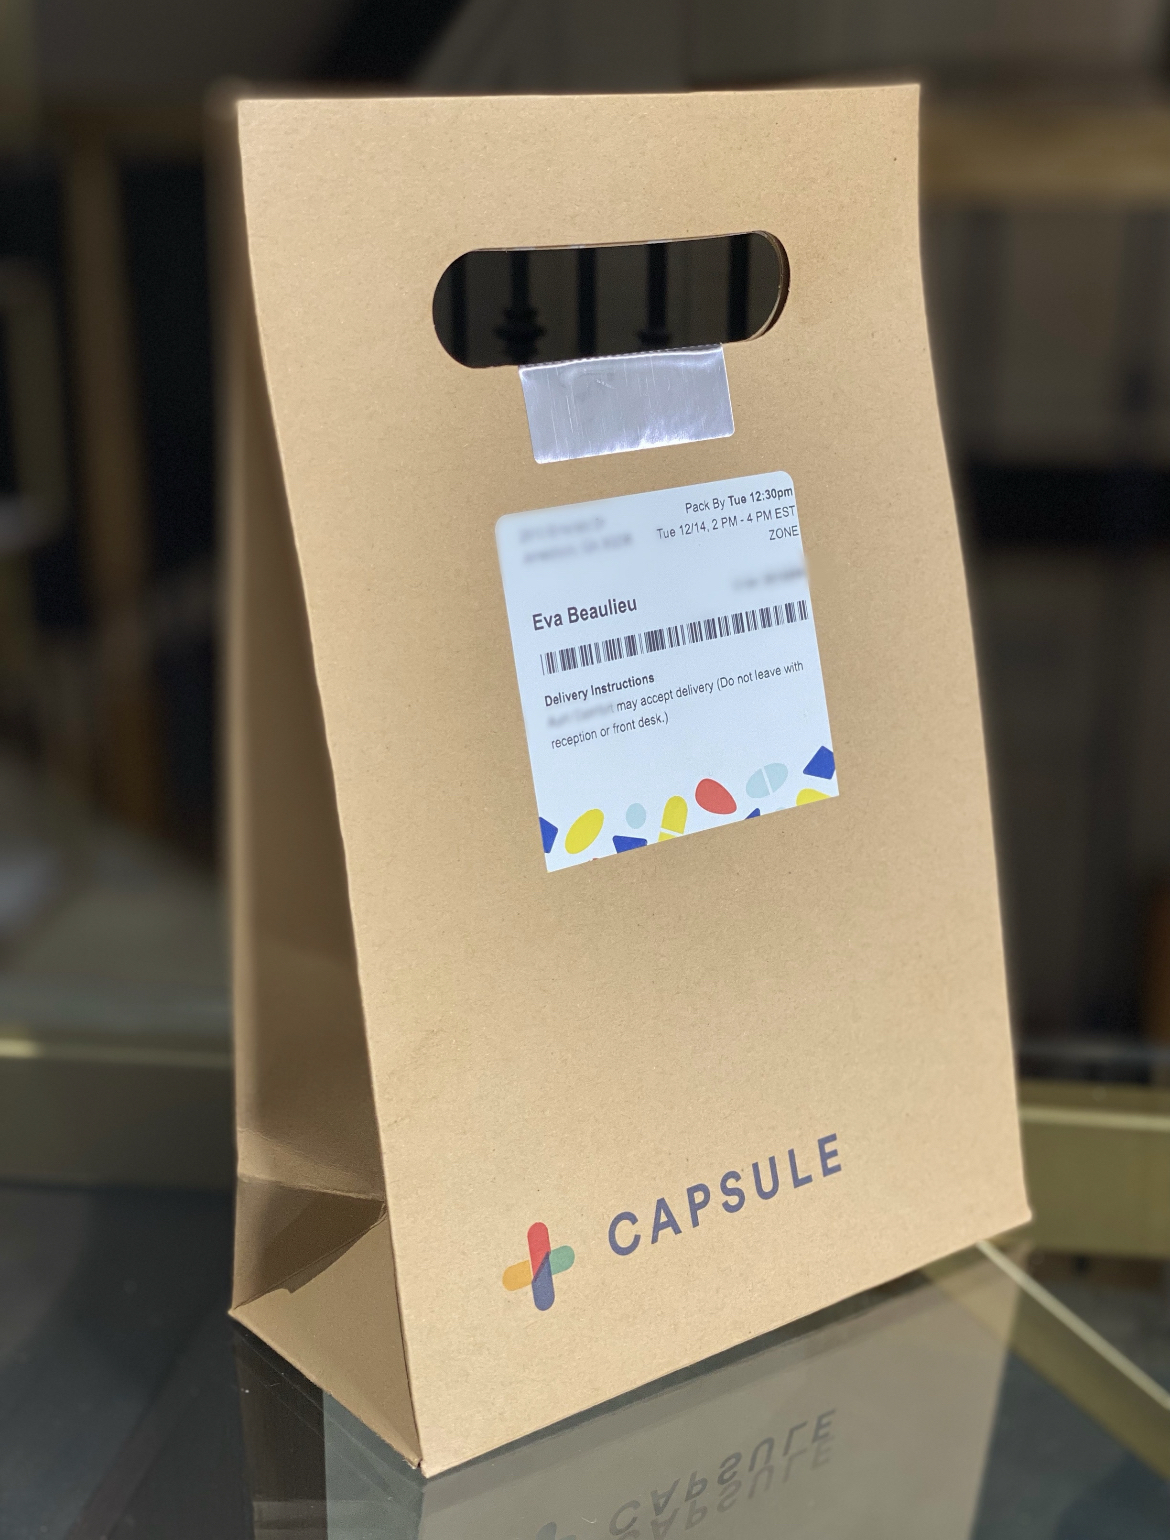 Capsule pharmacy prescription delivery